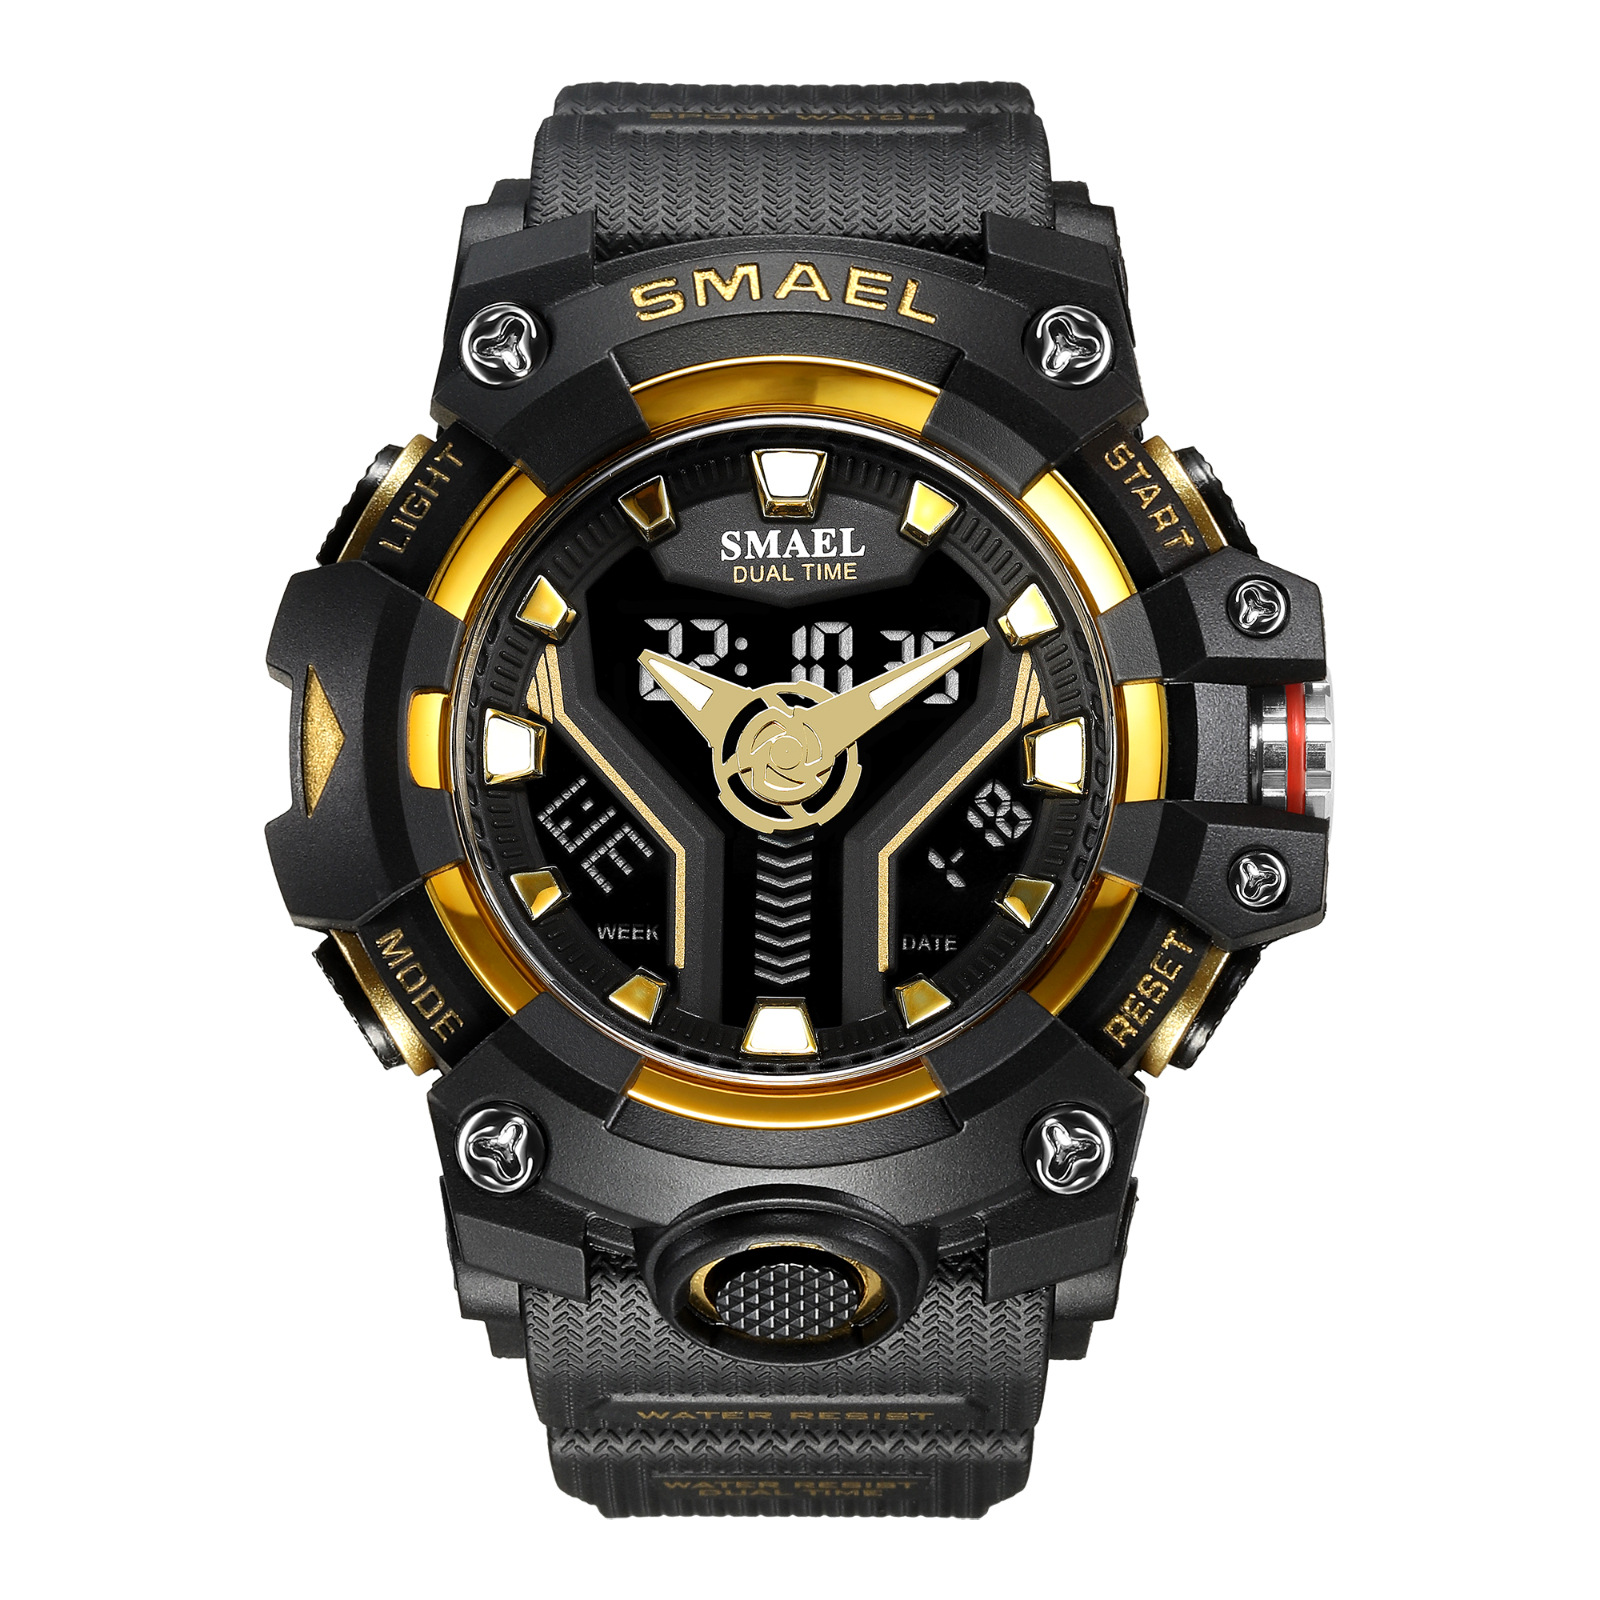 SMAEL 8075 Men's Analog Digital Waterproof Outdoor Multifunctional Watch For men